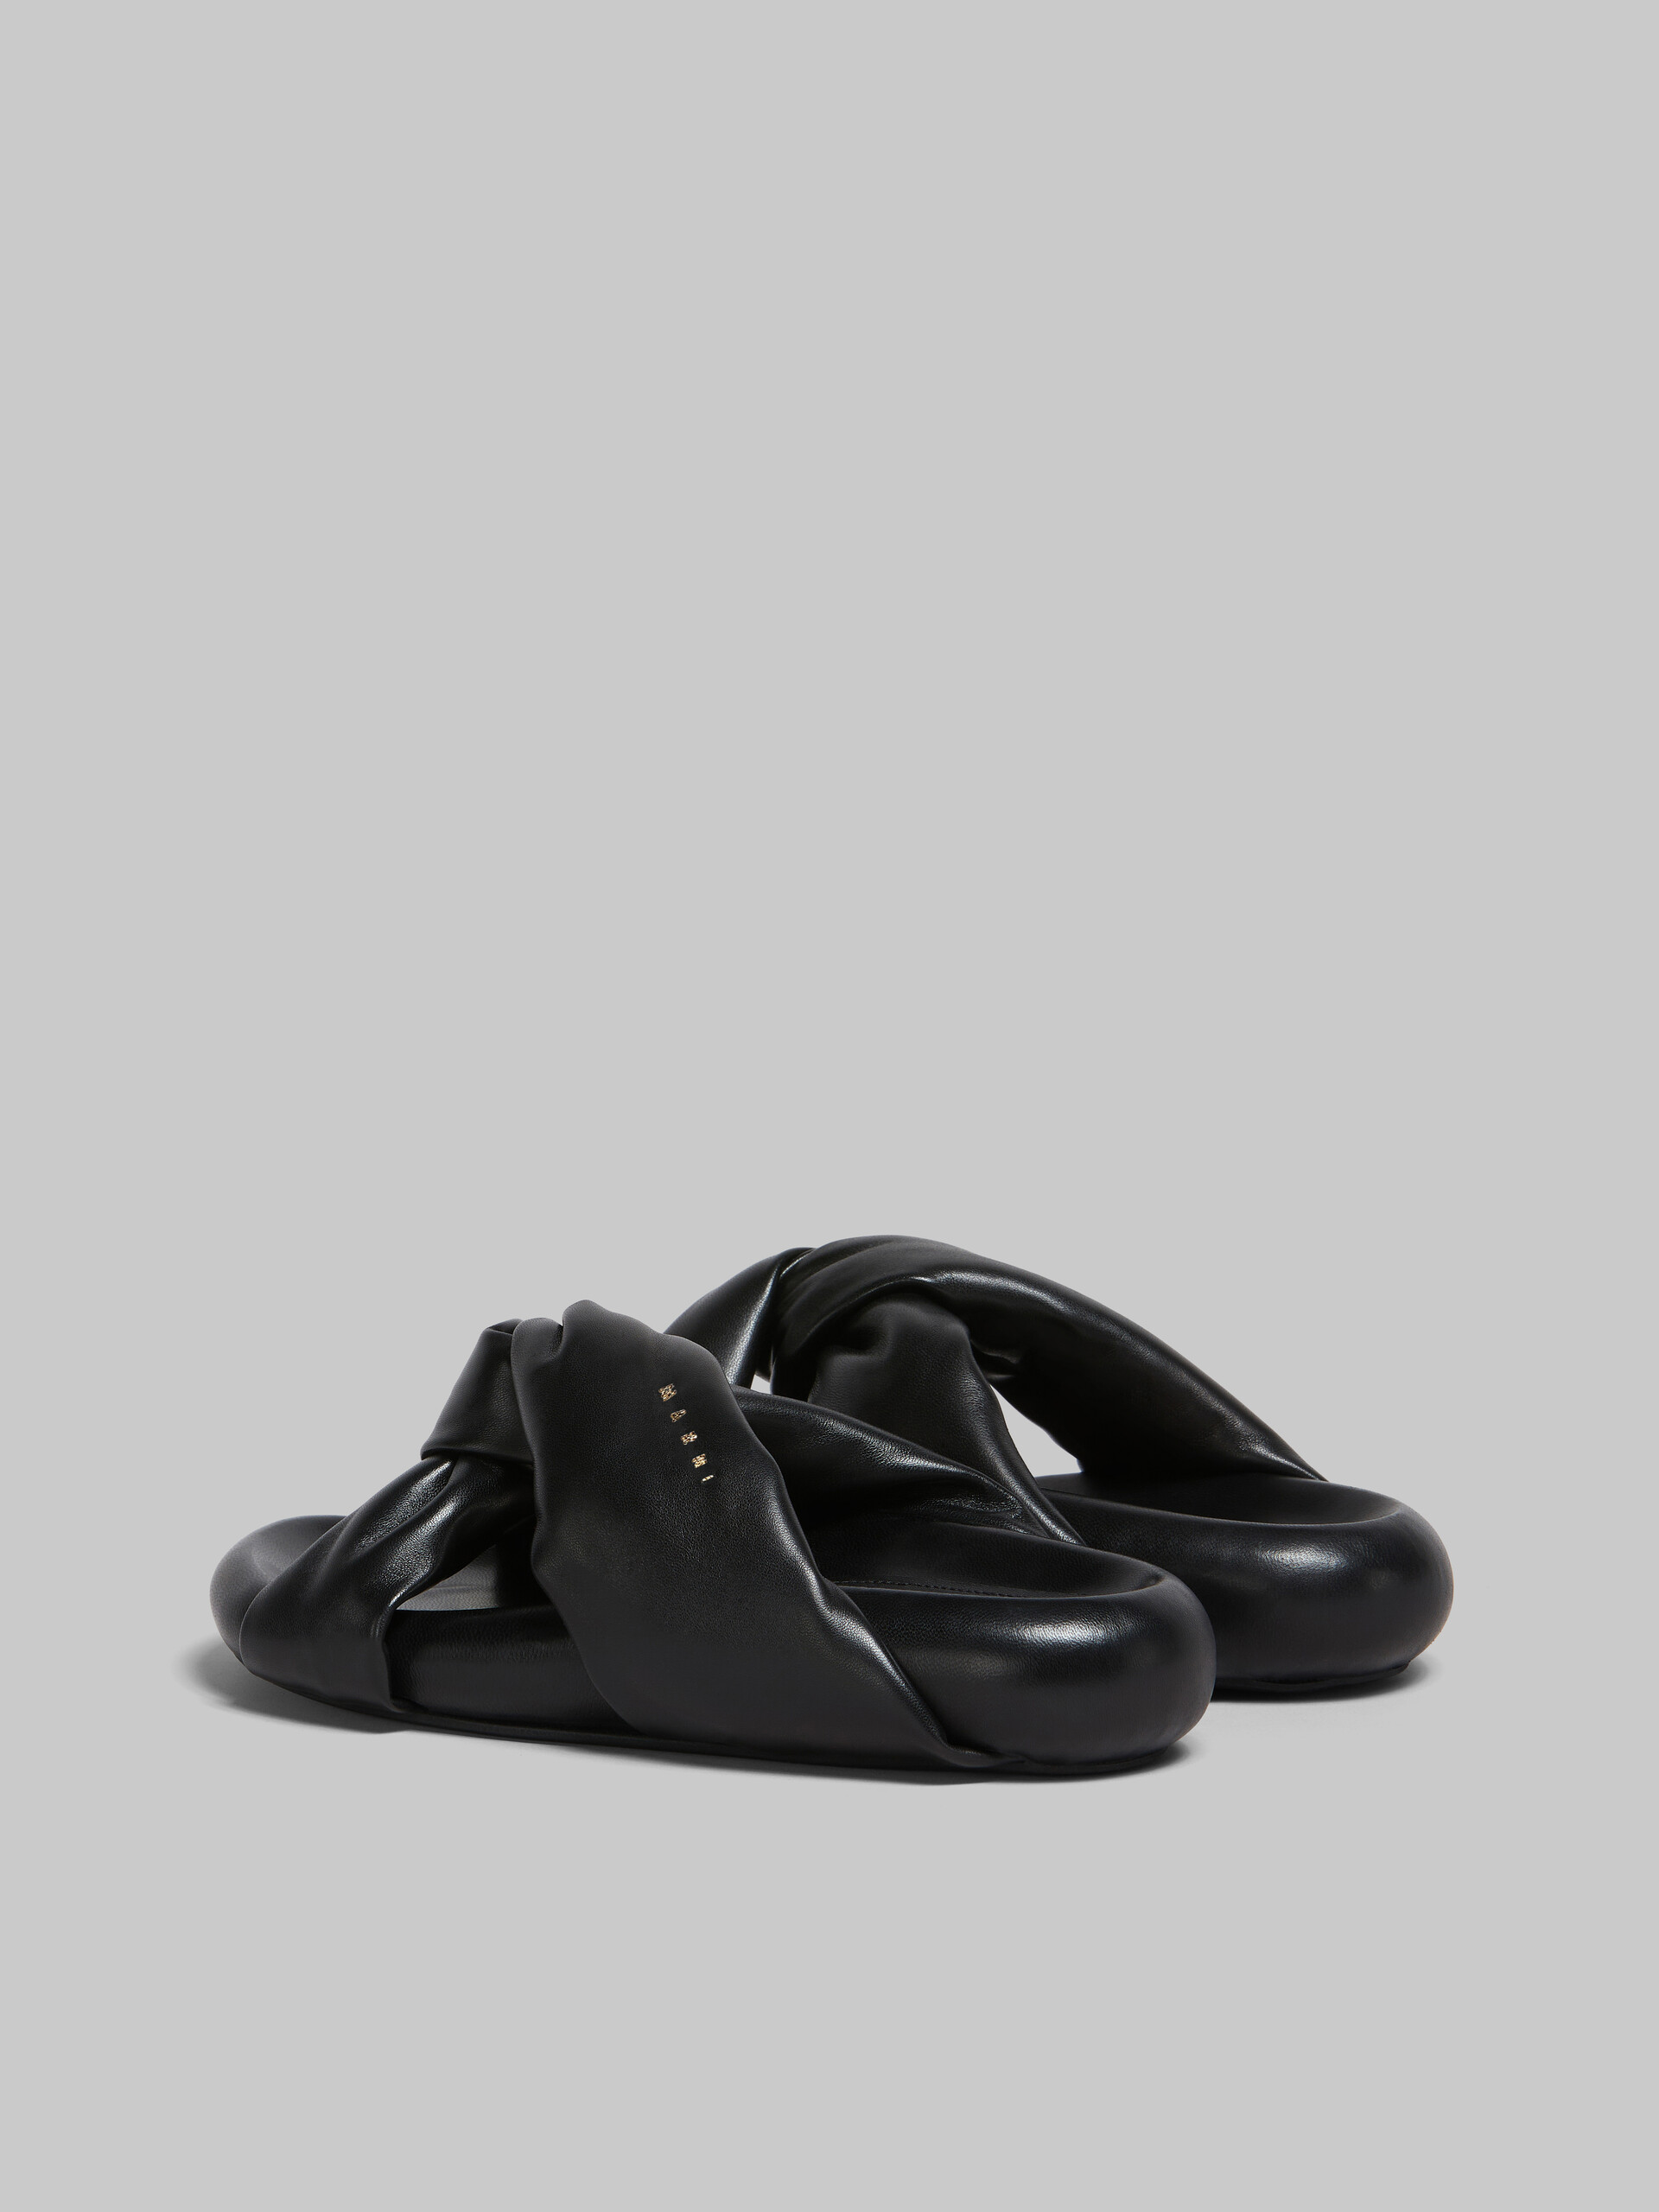 Black twisted leather Bubble sandal - Sandals - Image 3